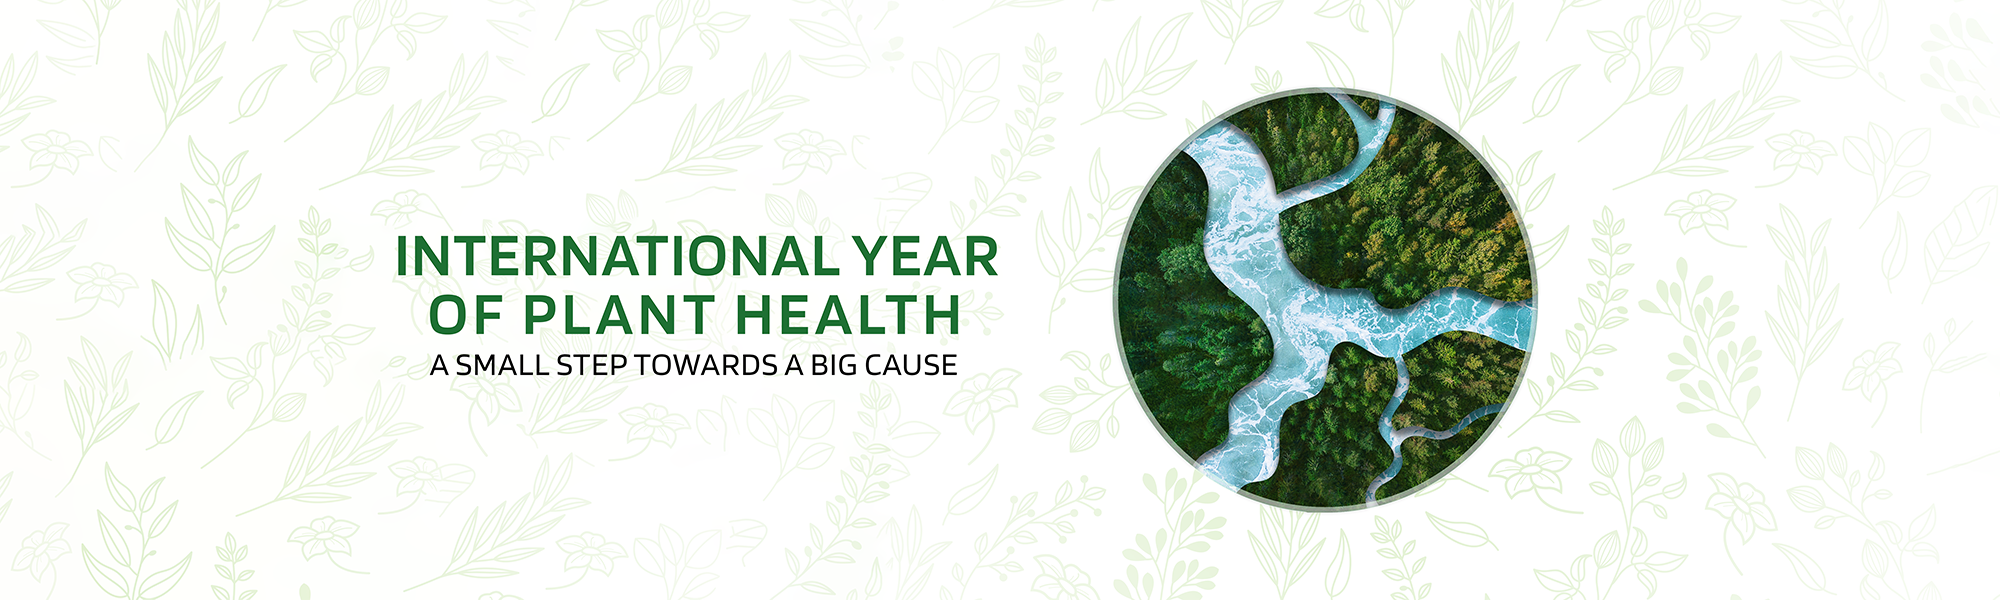 International Year of Plant Health 